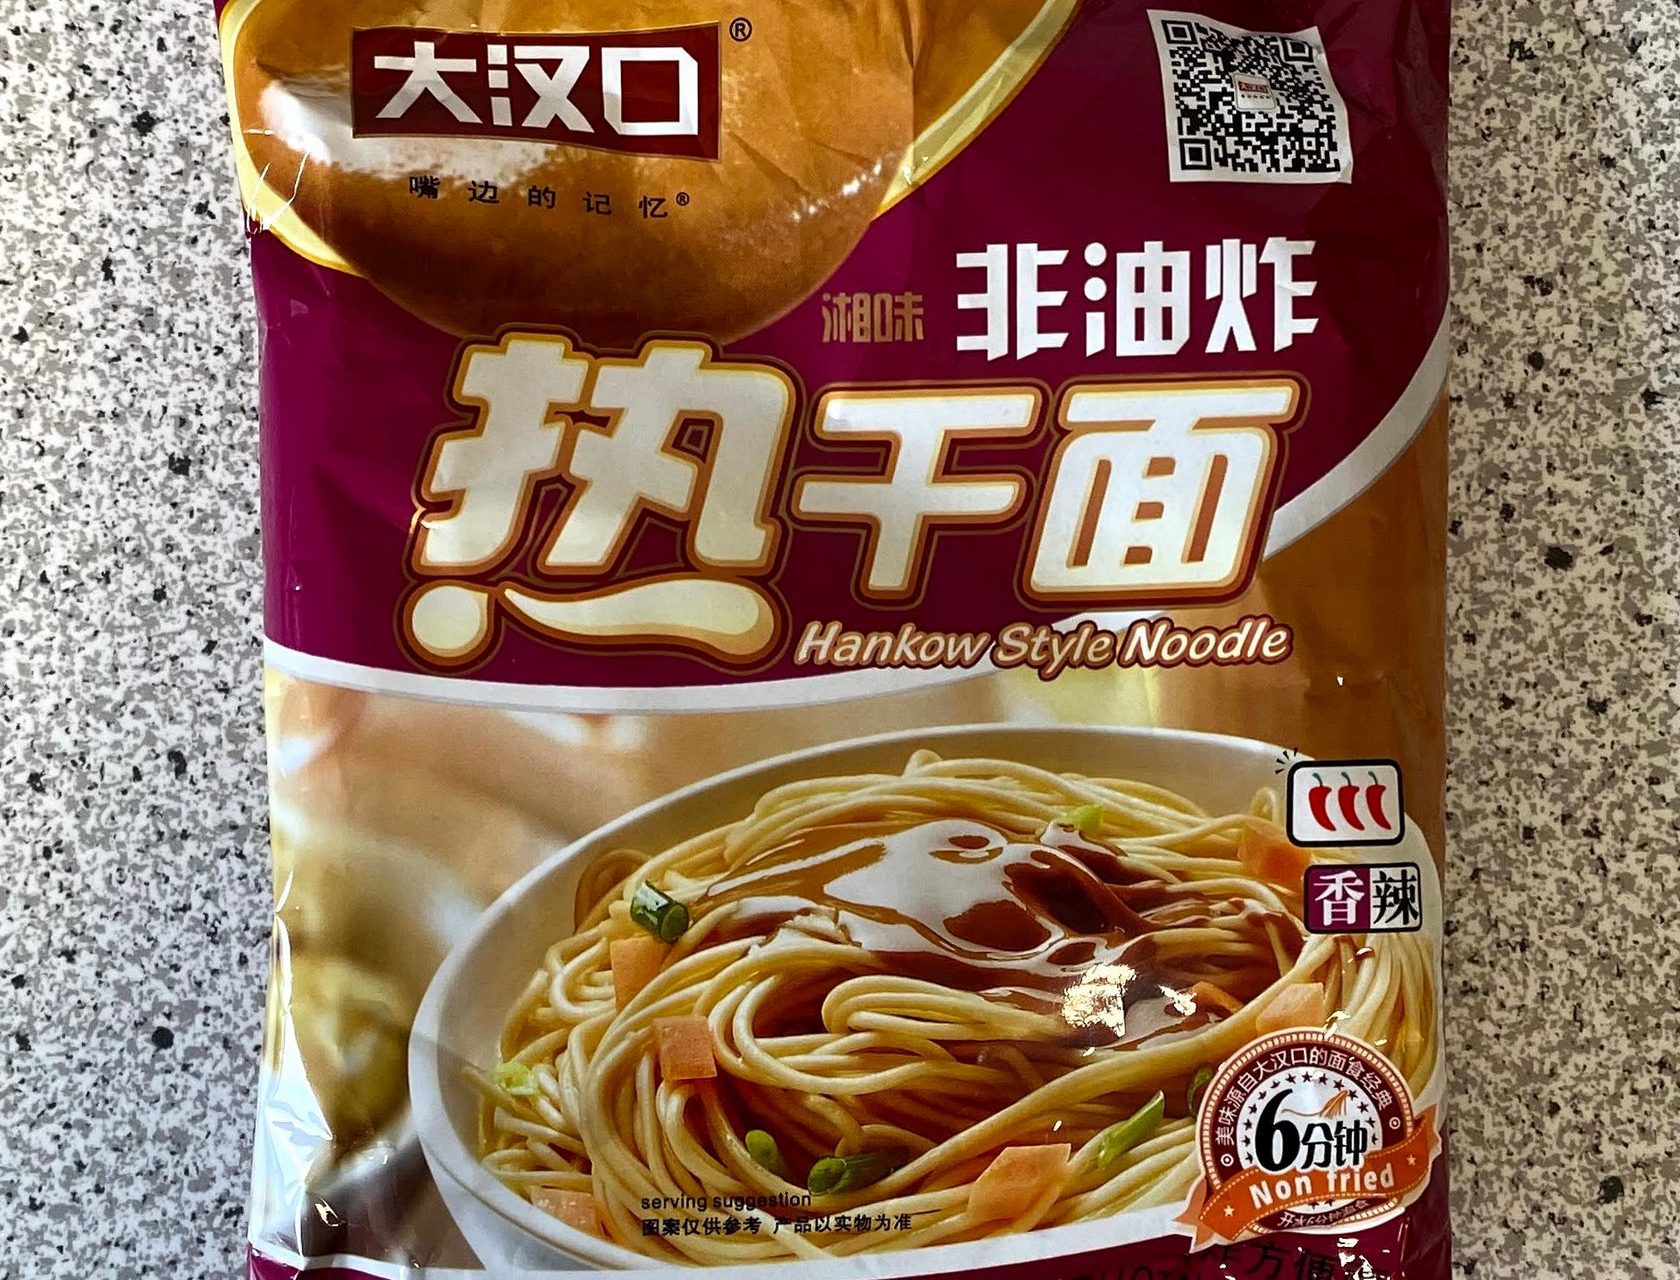 #1231: Hankow Style Noodle "Sesam Paste Hunan Spicy Flavour"